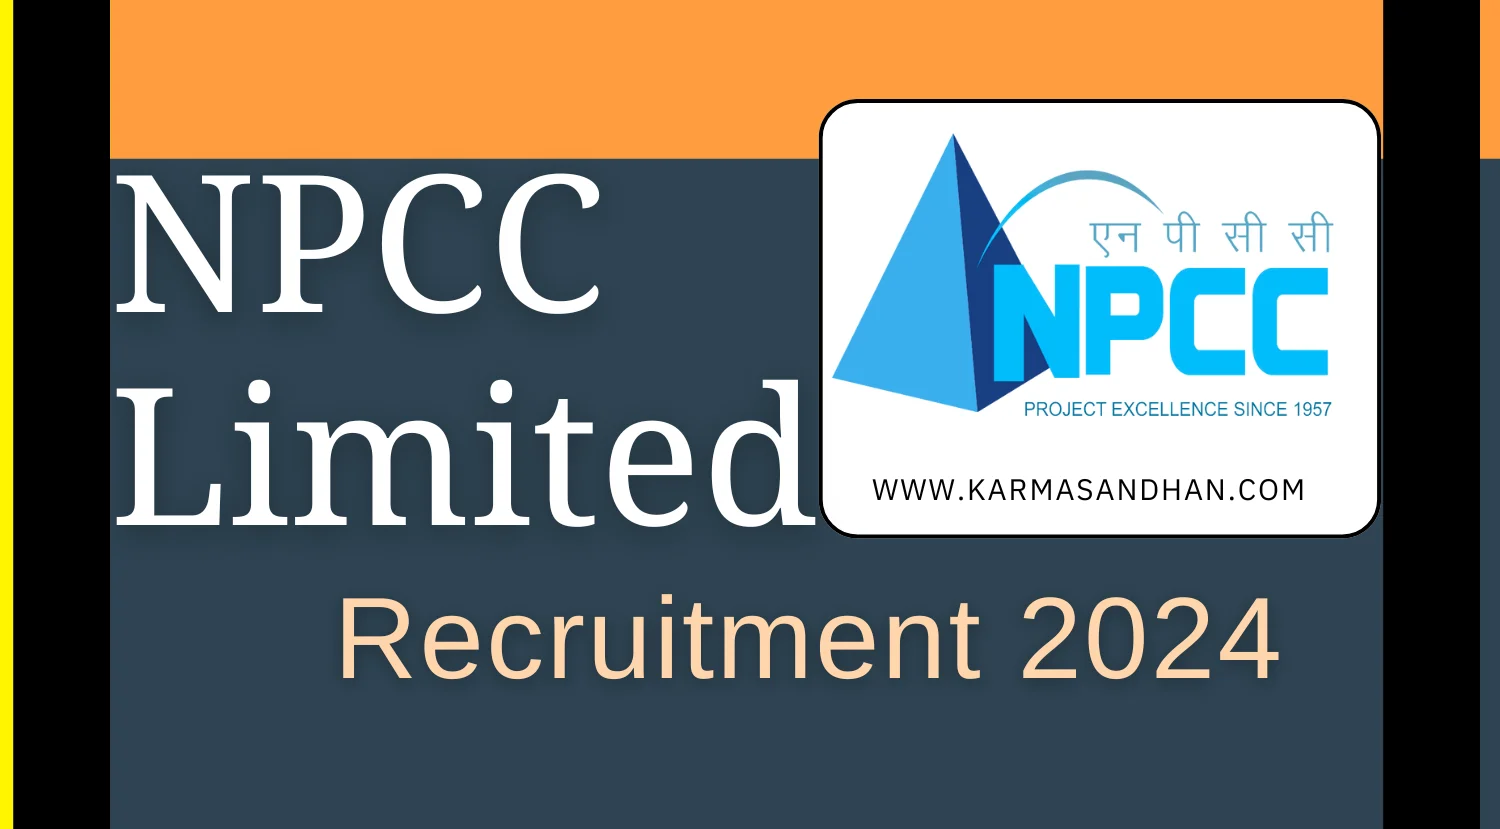 NPCC Site engineer Recruitment 2024 Notification for Various Vacancies